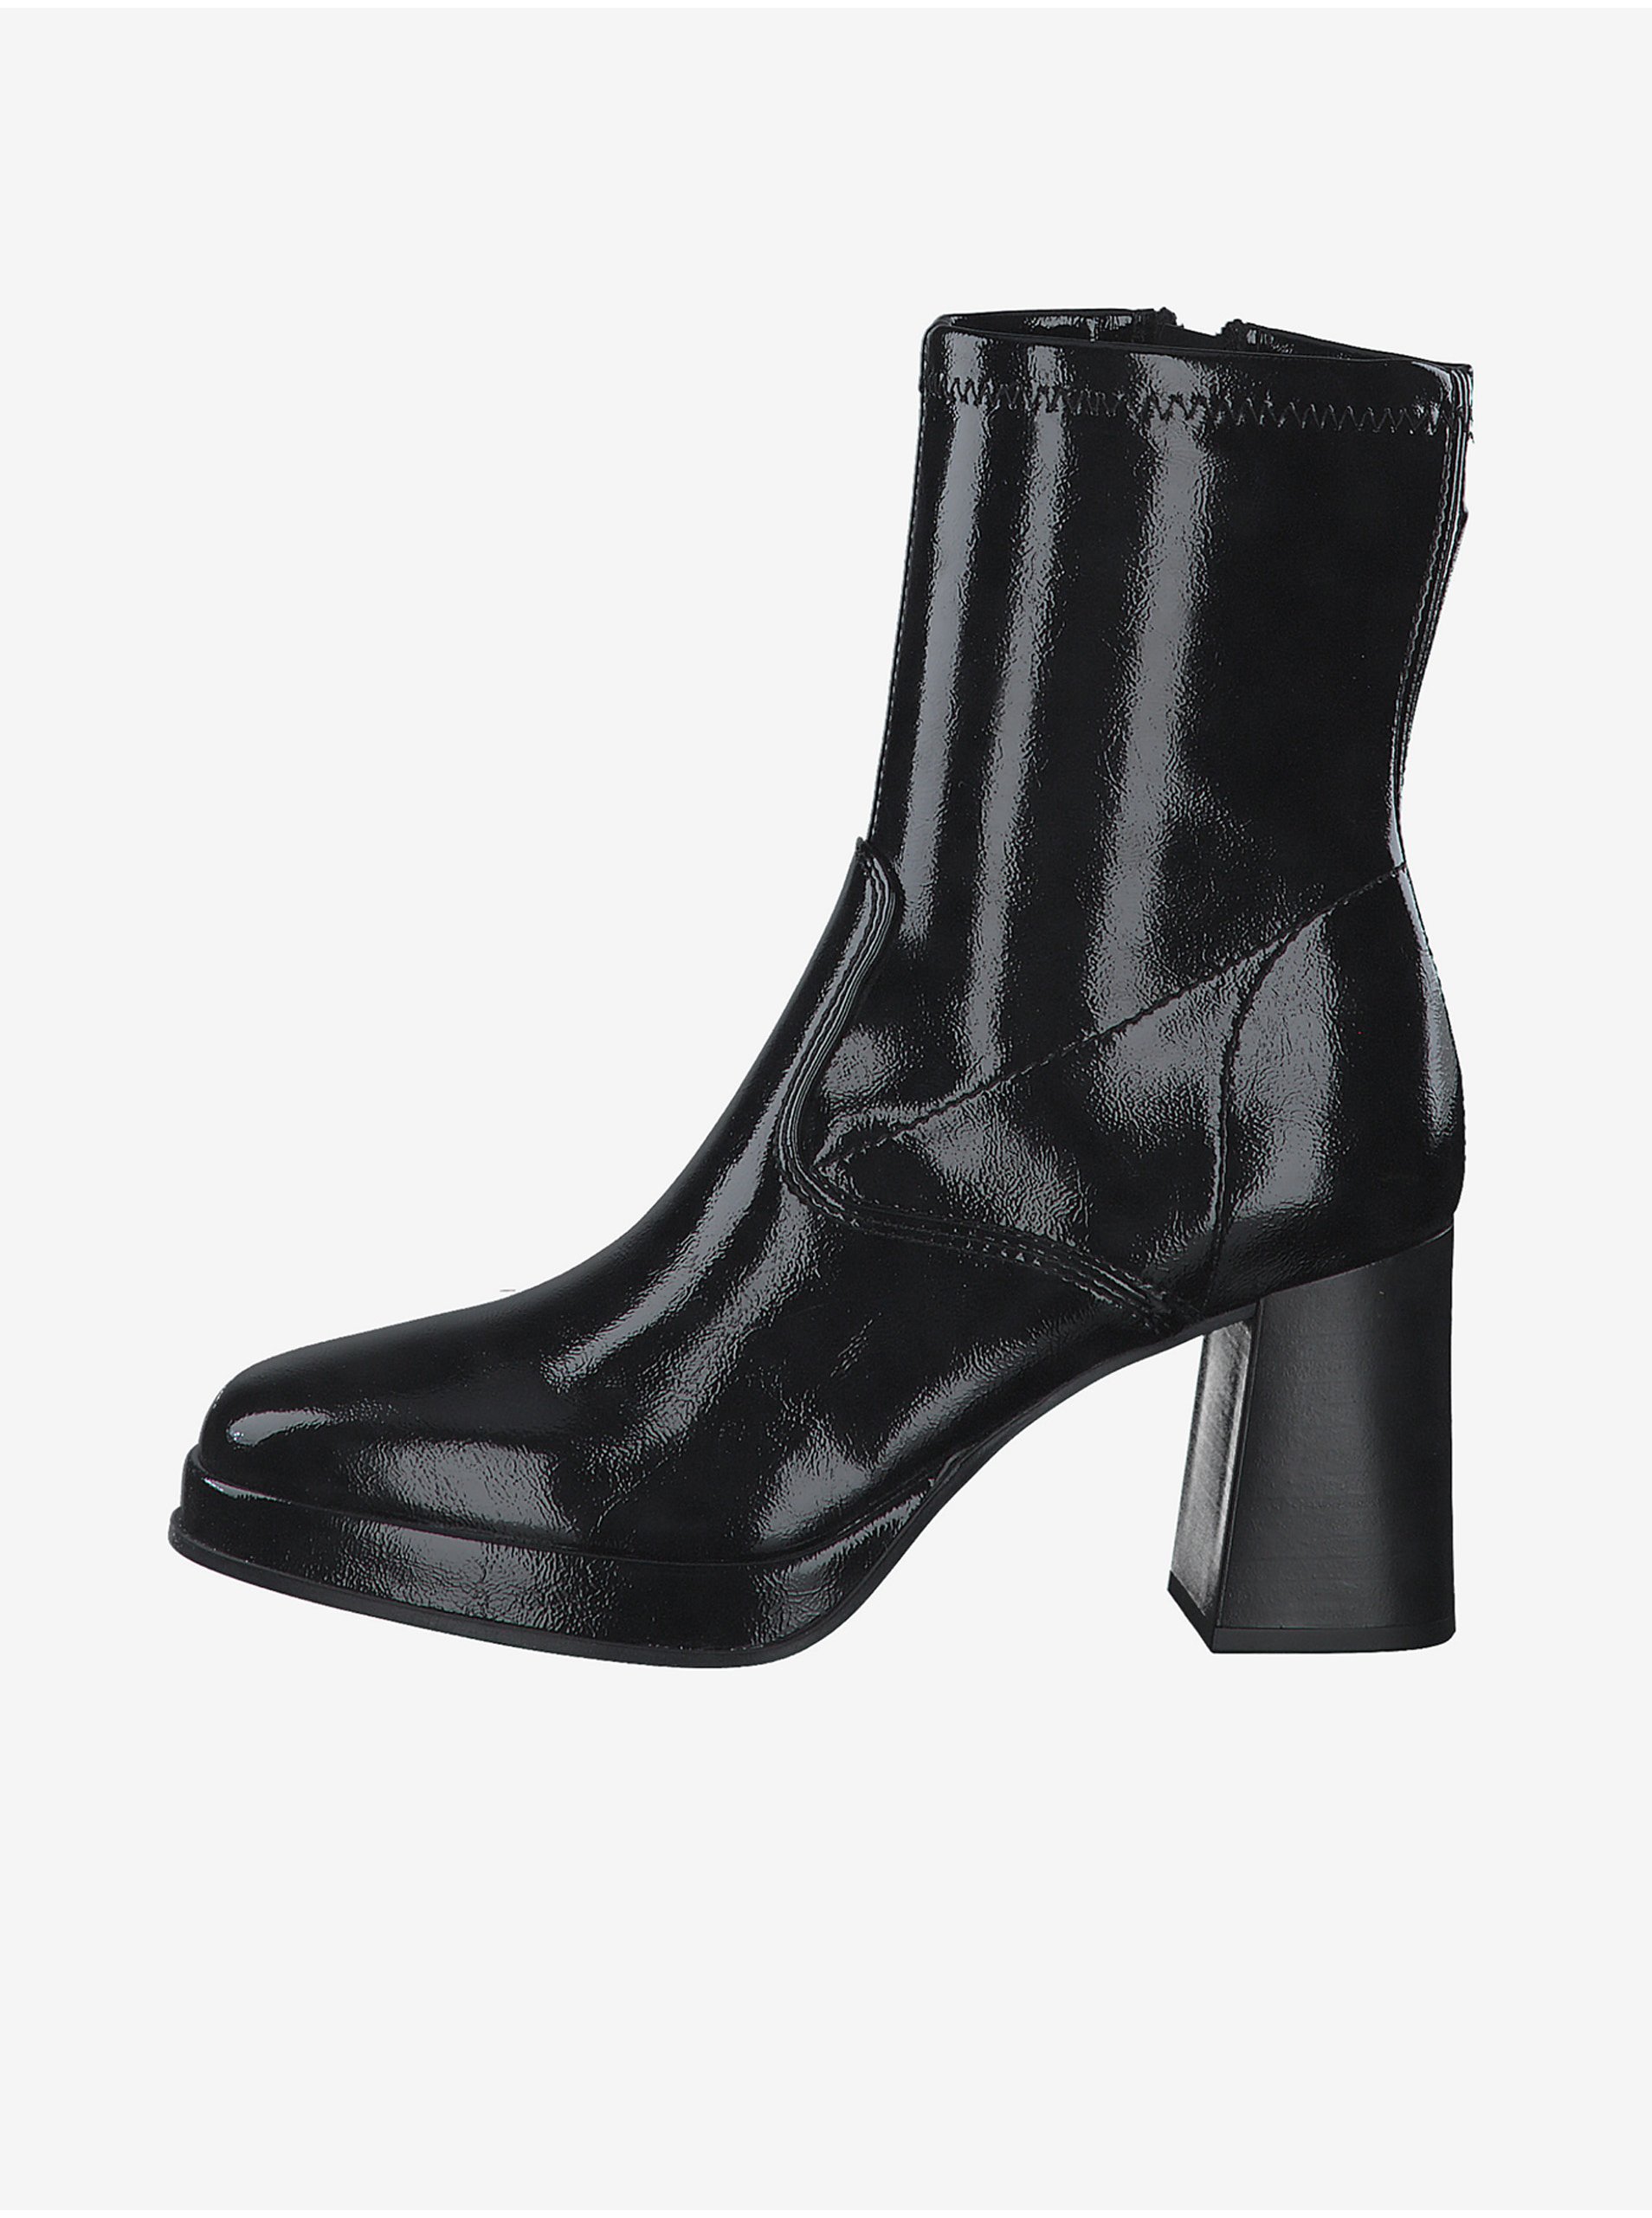 Black Tamaris High HeelEd Ankle Boots - Women